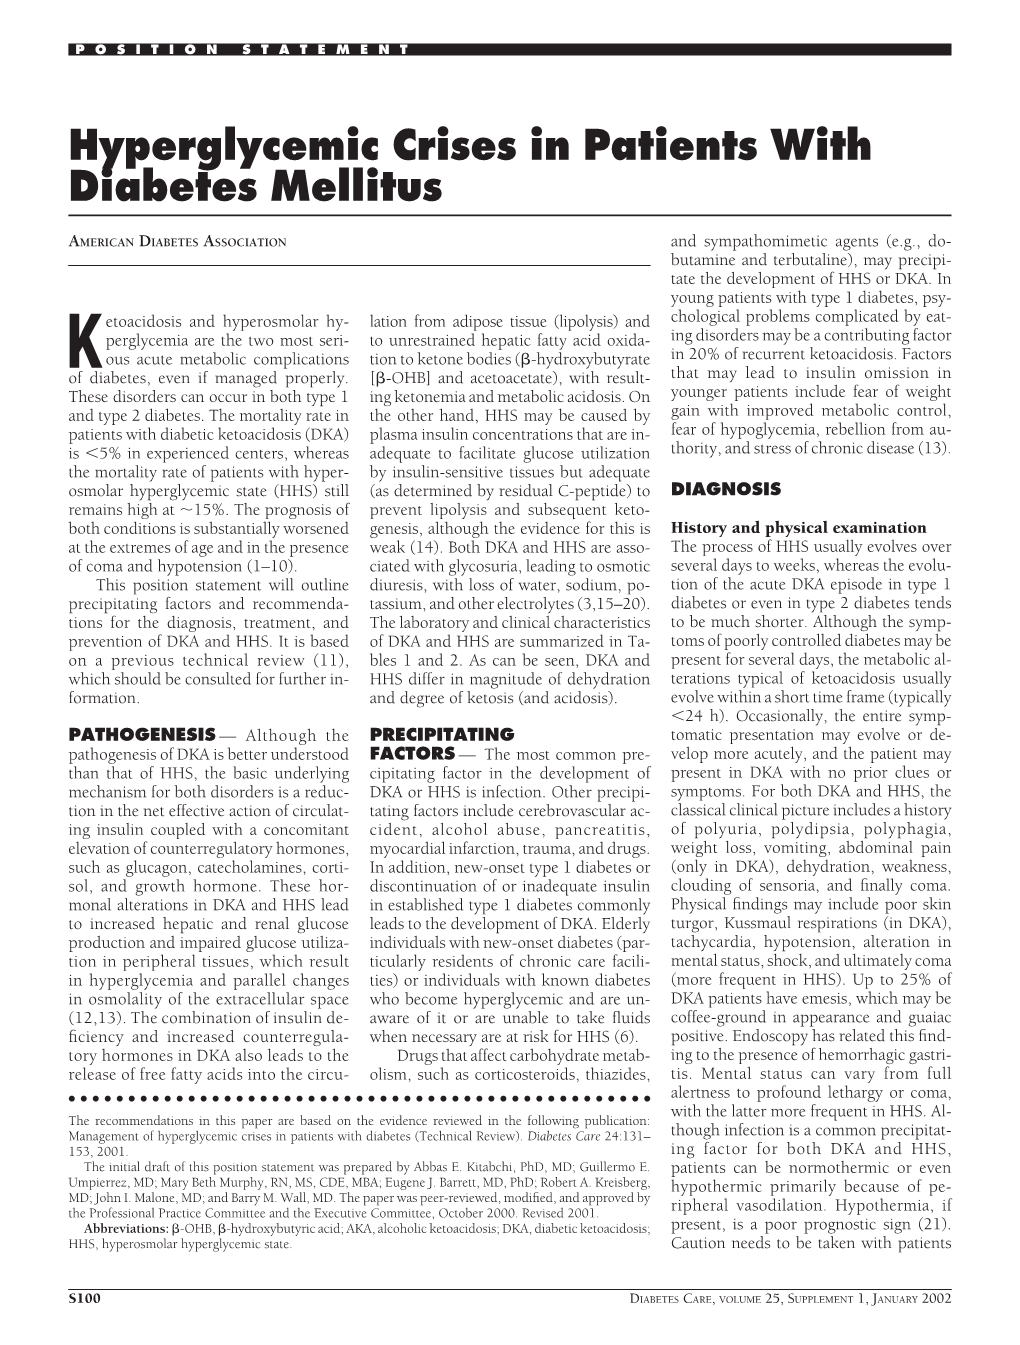 Hyperglycemic Crises in Patients with Diabetes Mellitus